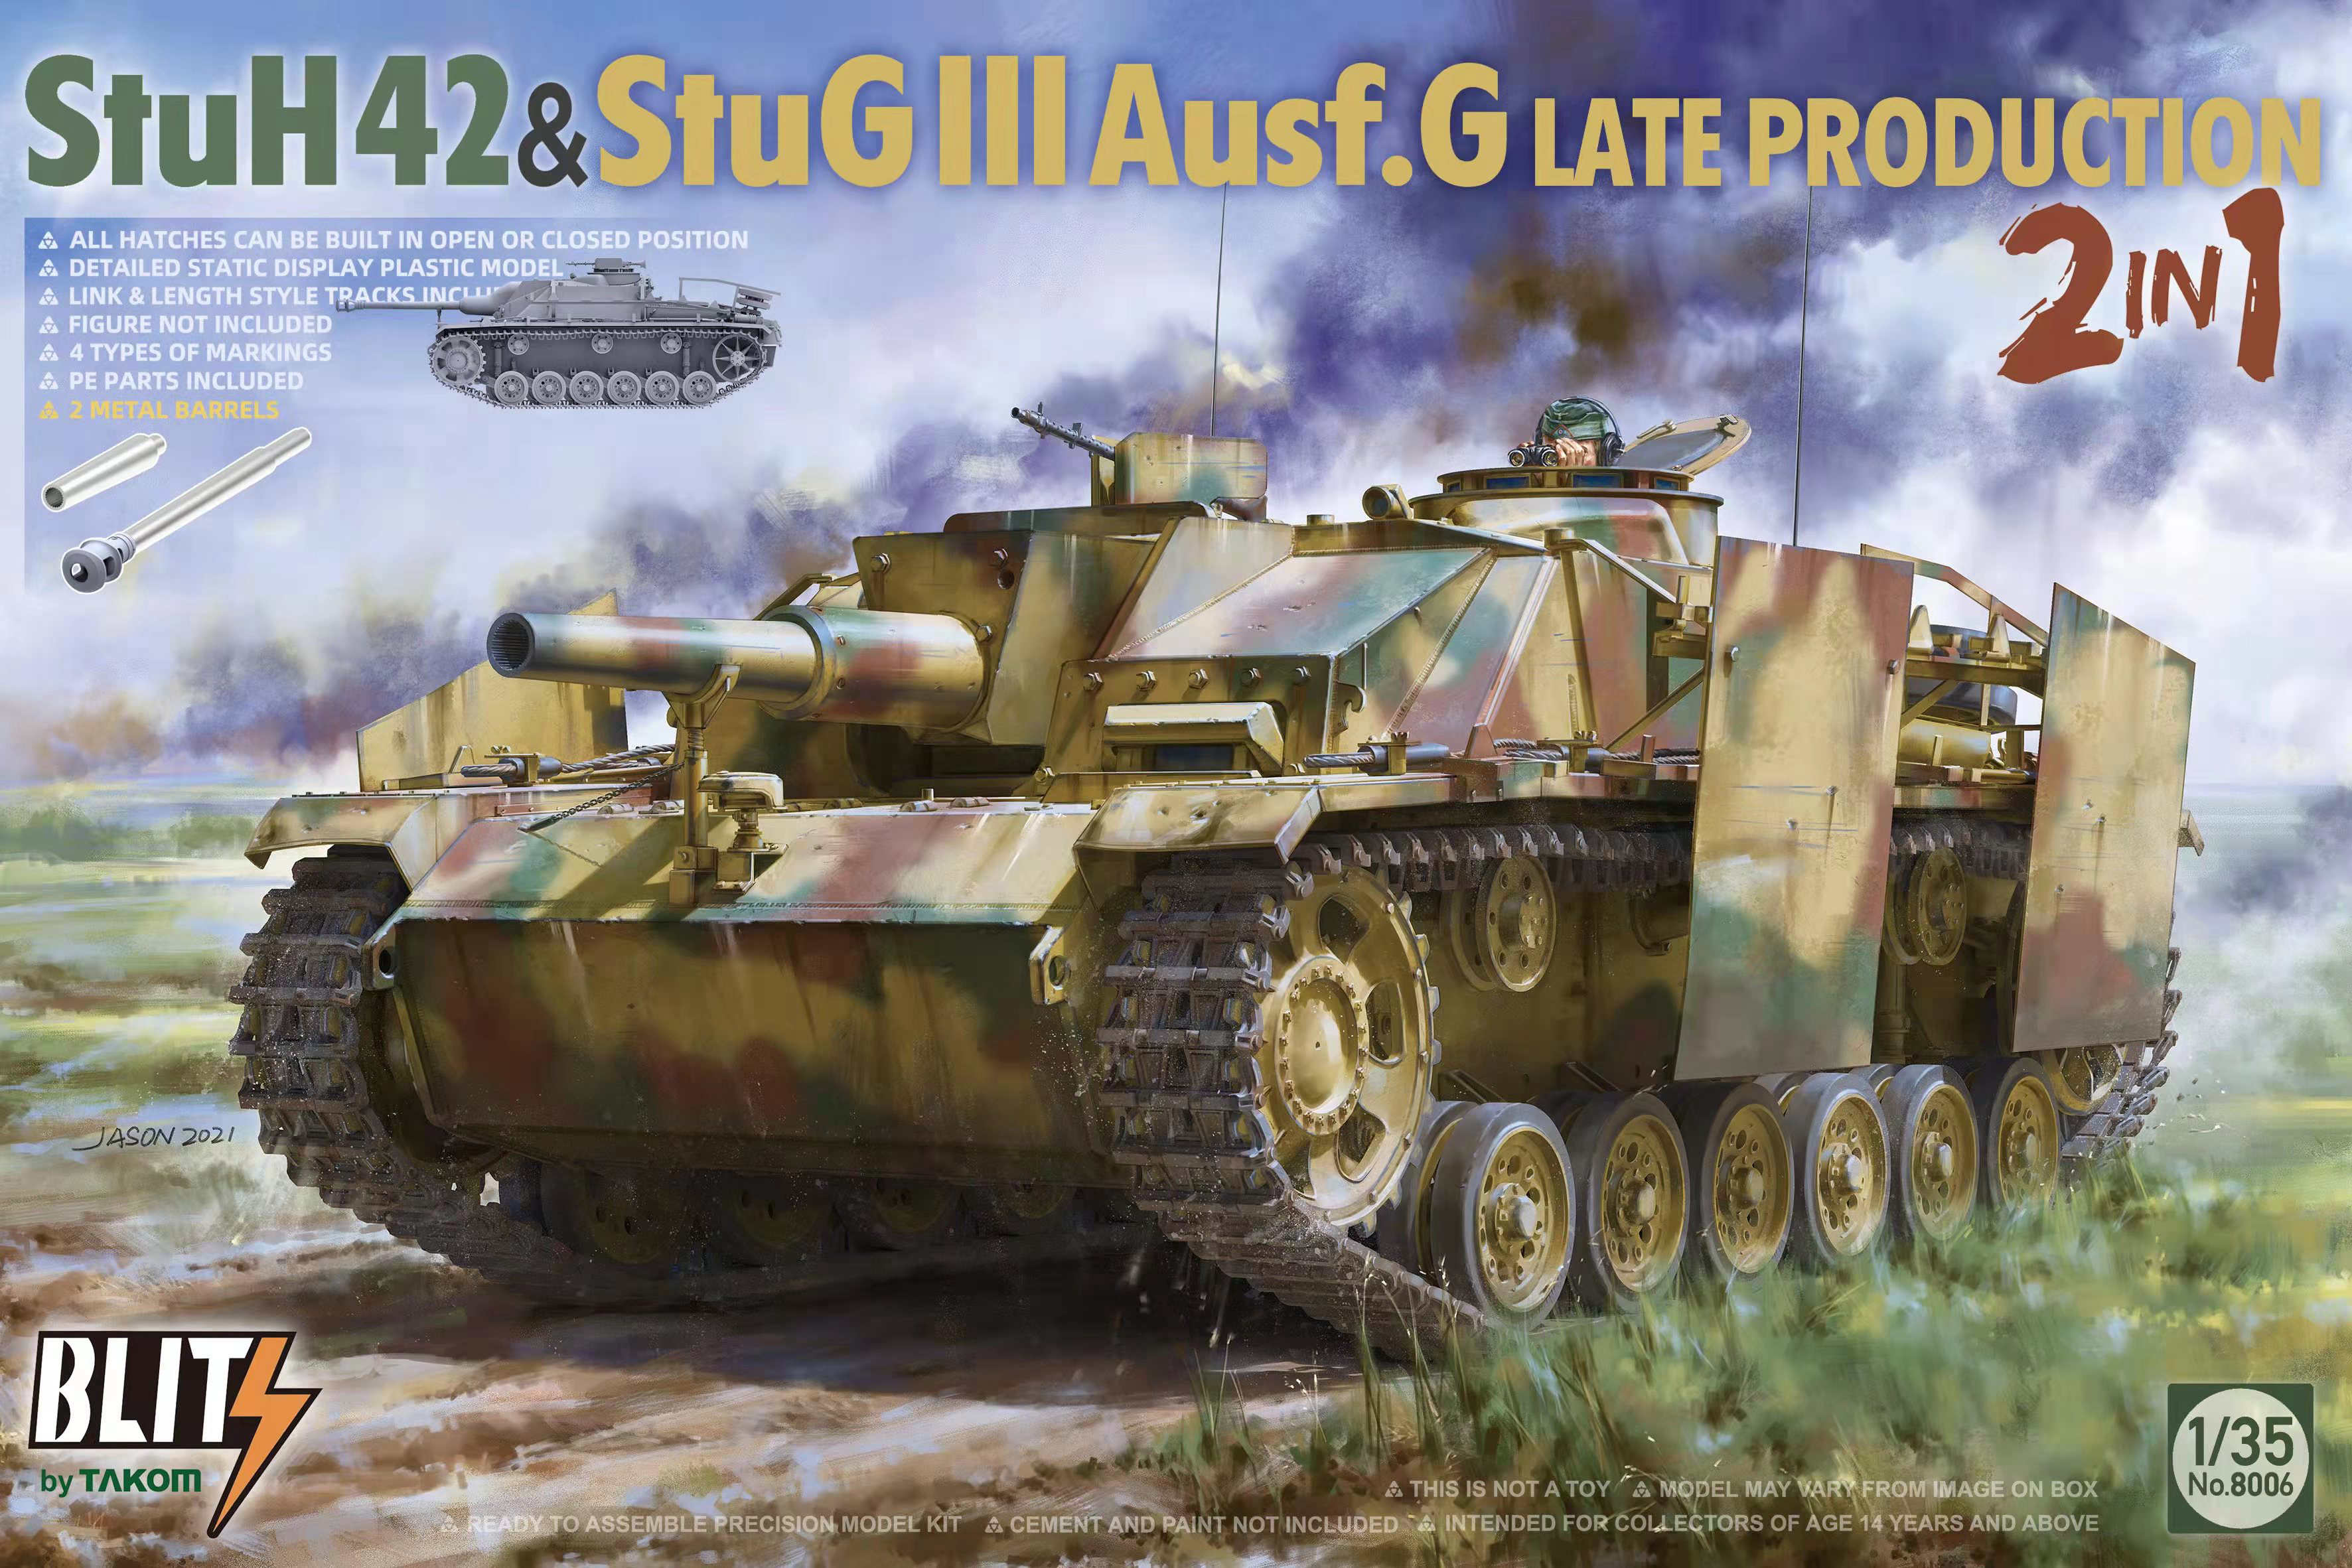 StuH 42 & StuG III Ausf. G Late Production (2 in 1)